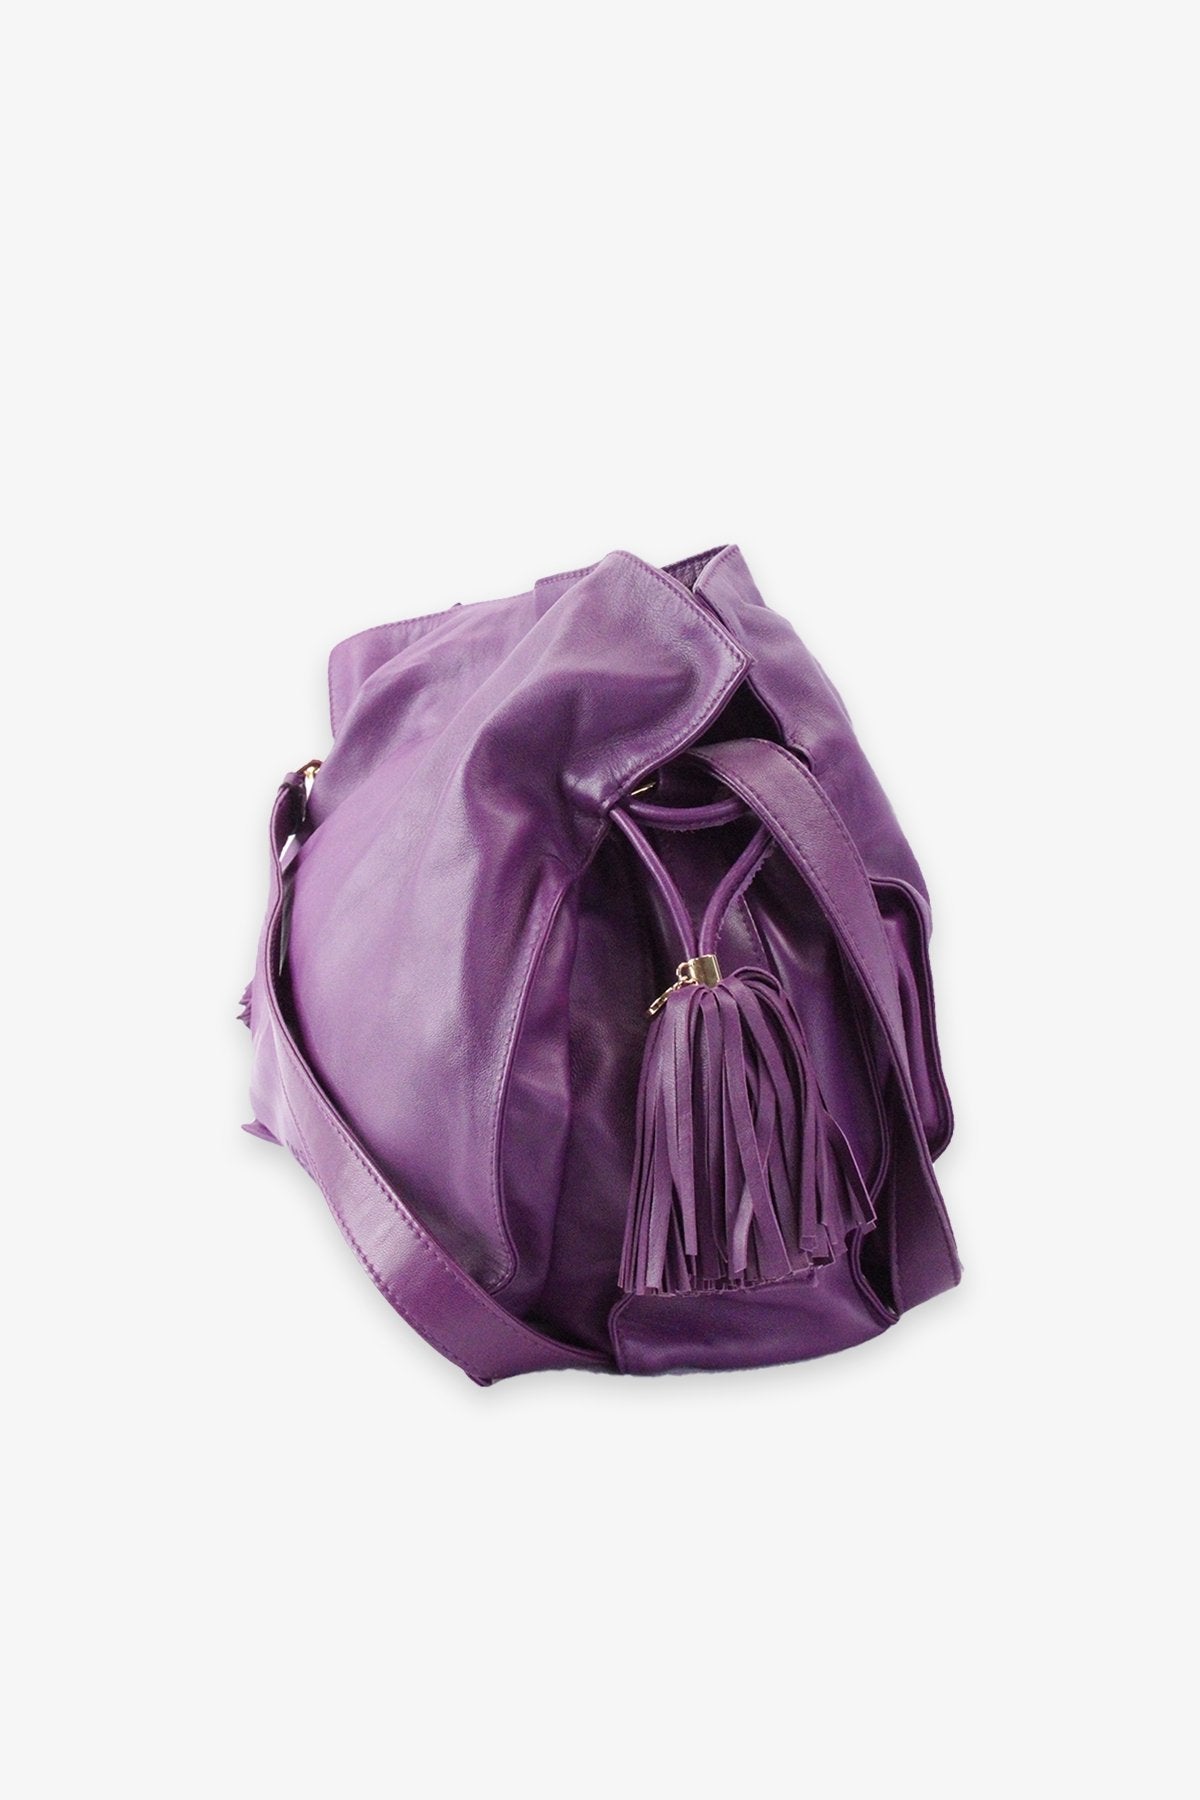 Loewe Purple Flamingo Handbag - shop-olivia.com